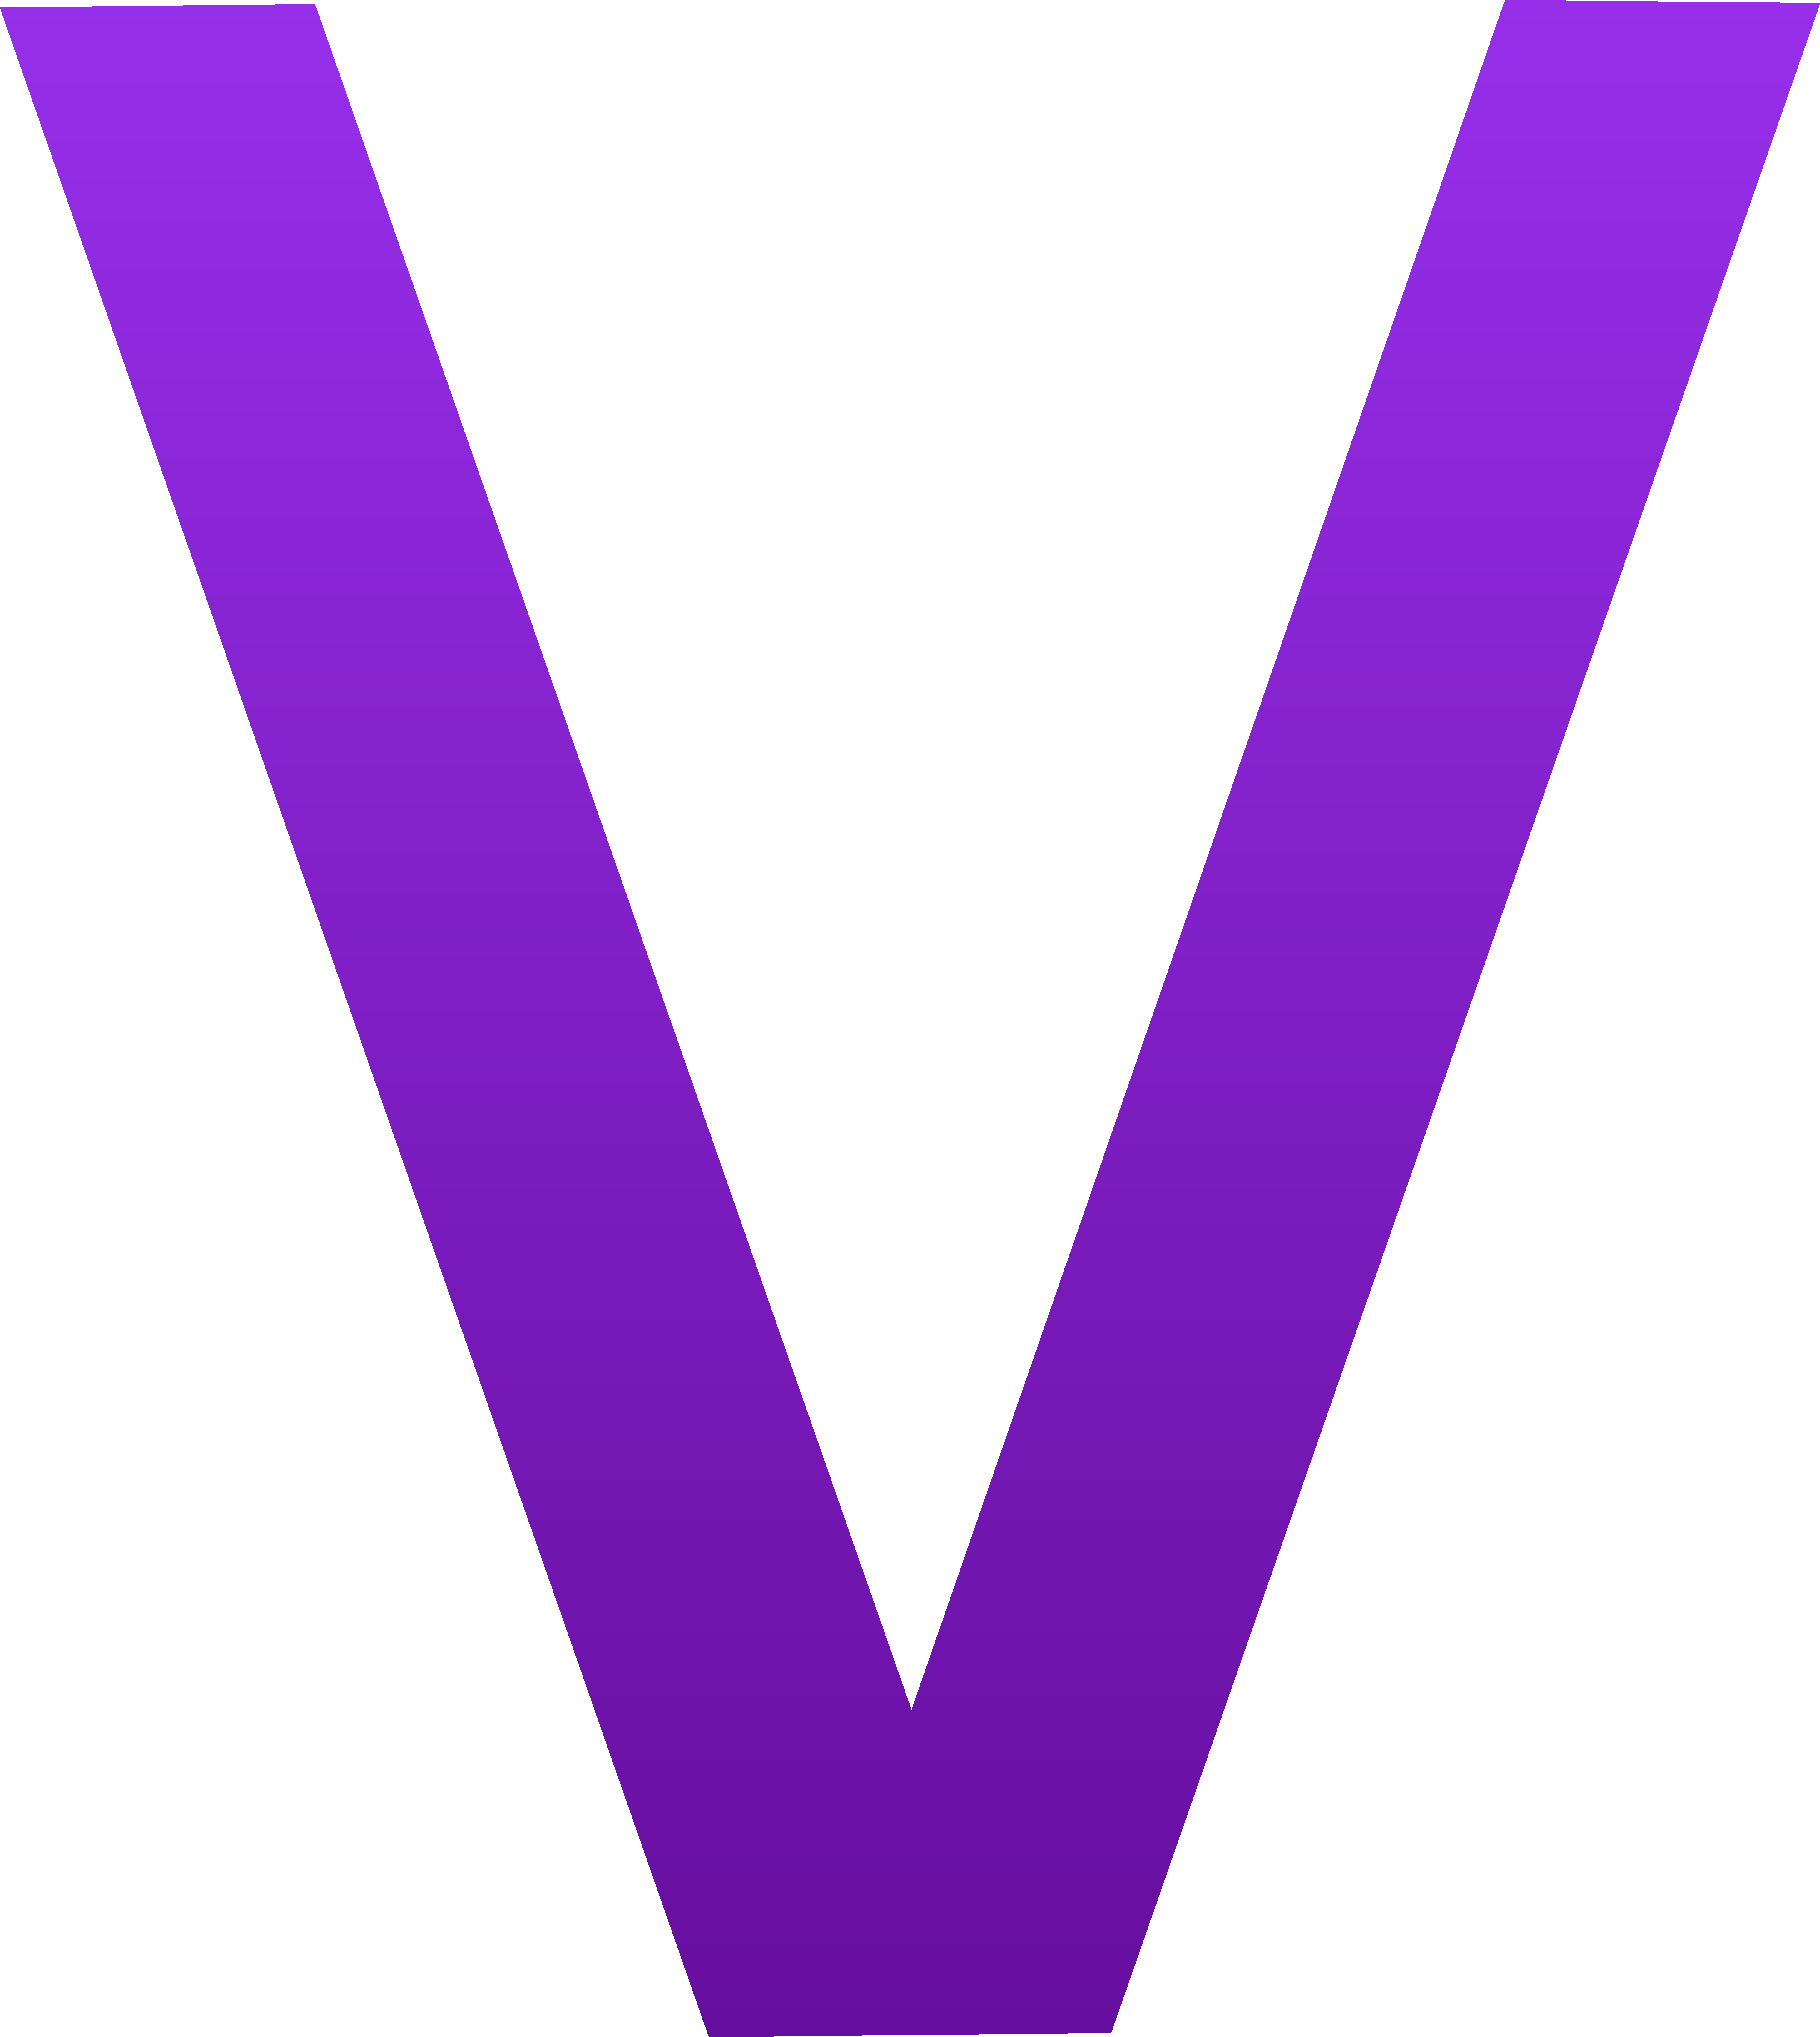 The Letter V - Purple Letter V (5827x6520)